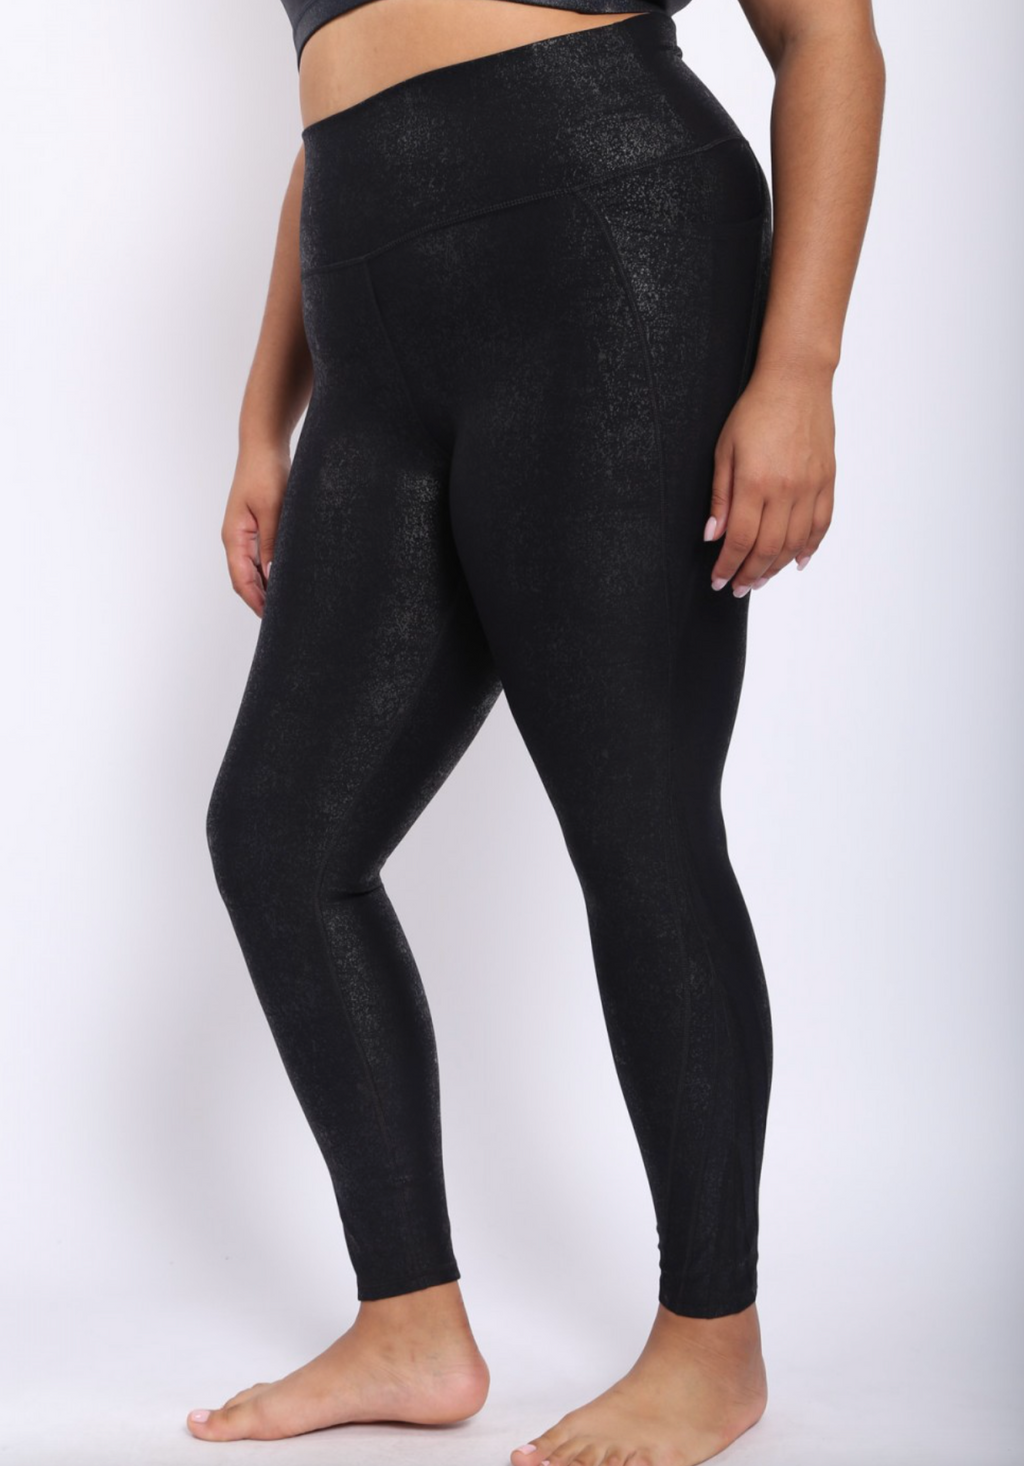 Black Foil Leggings - Plus Size – Filthy Gorgeous on Main